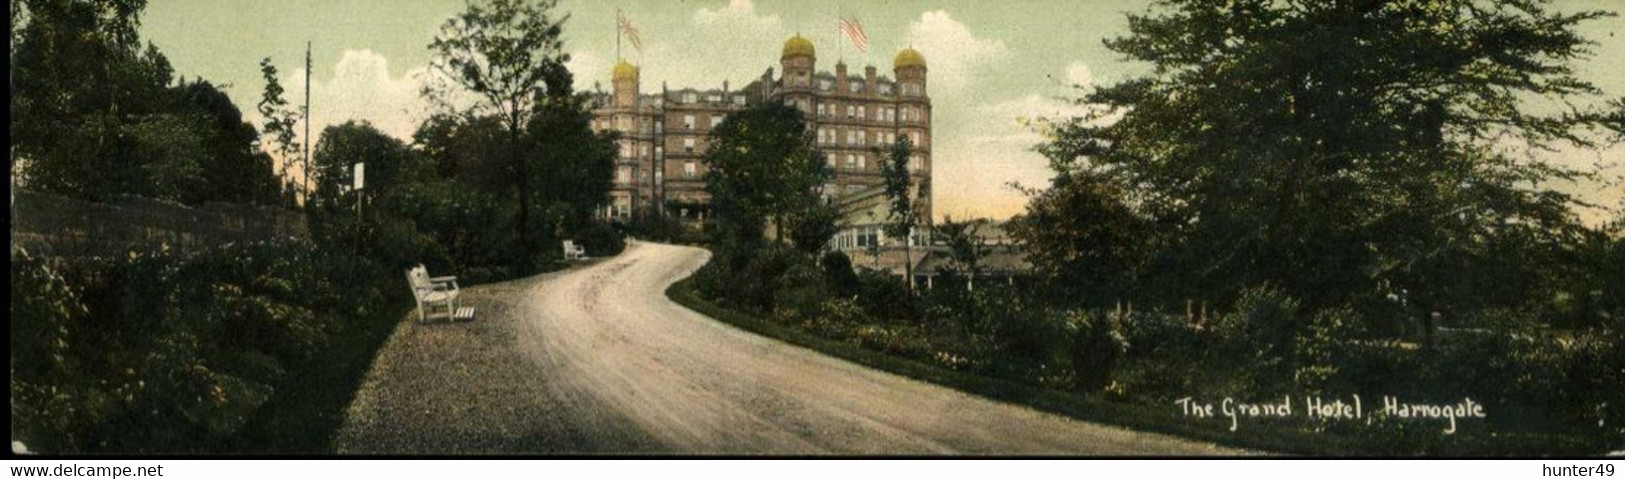 Harrogate The Grand Hotel Panoramic Card - Harrogate